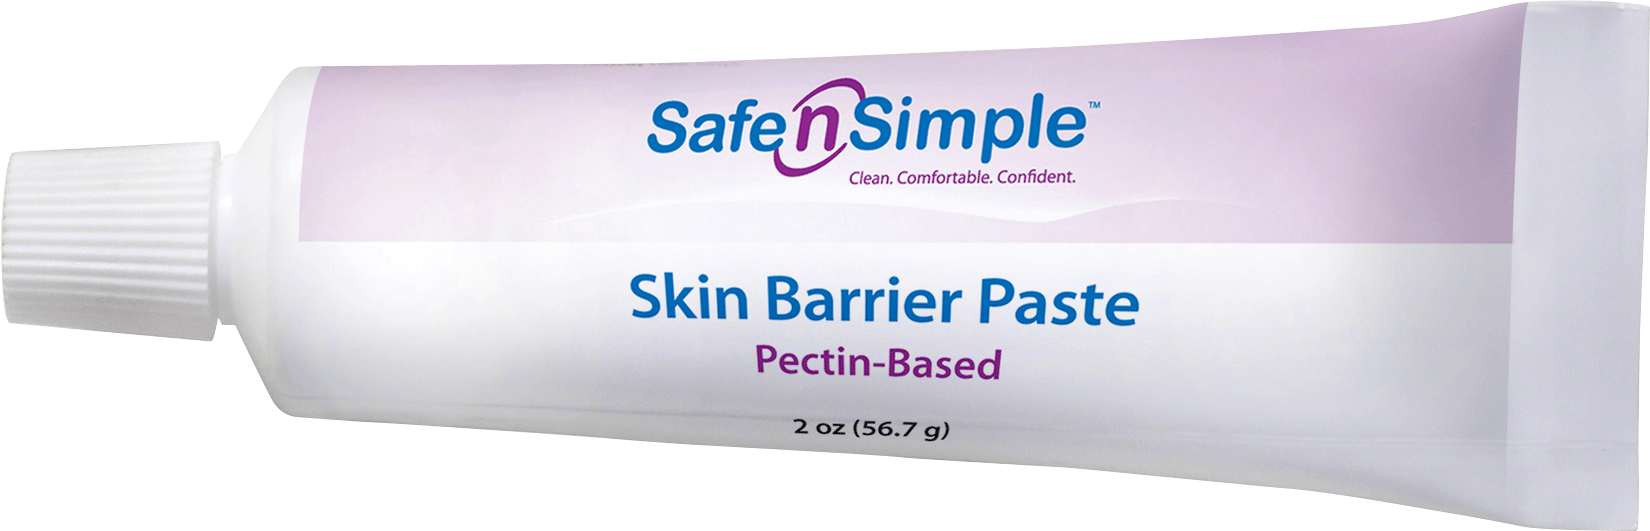 CA/24 - Pectin-Based Skin Barrier Paste, 2 oz.  - Best Buy Medical Supplies